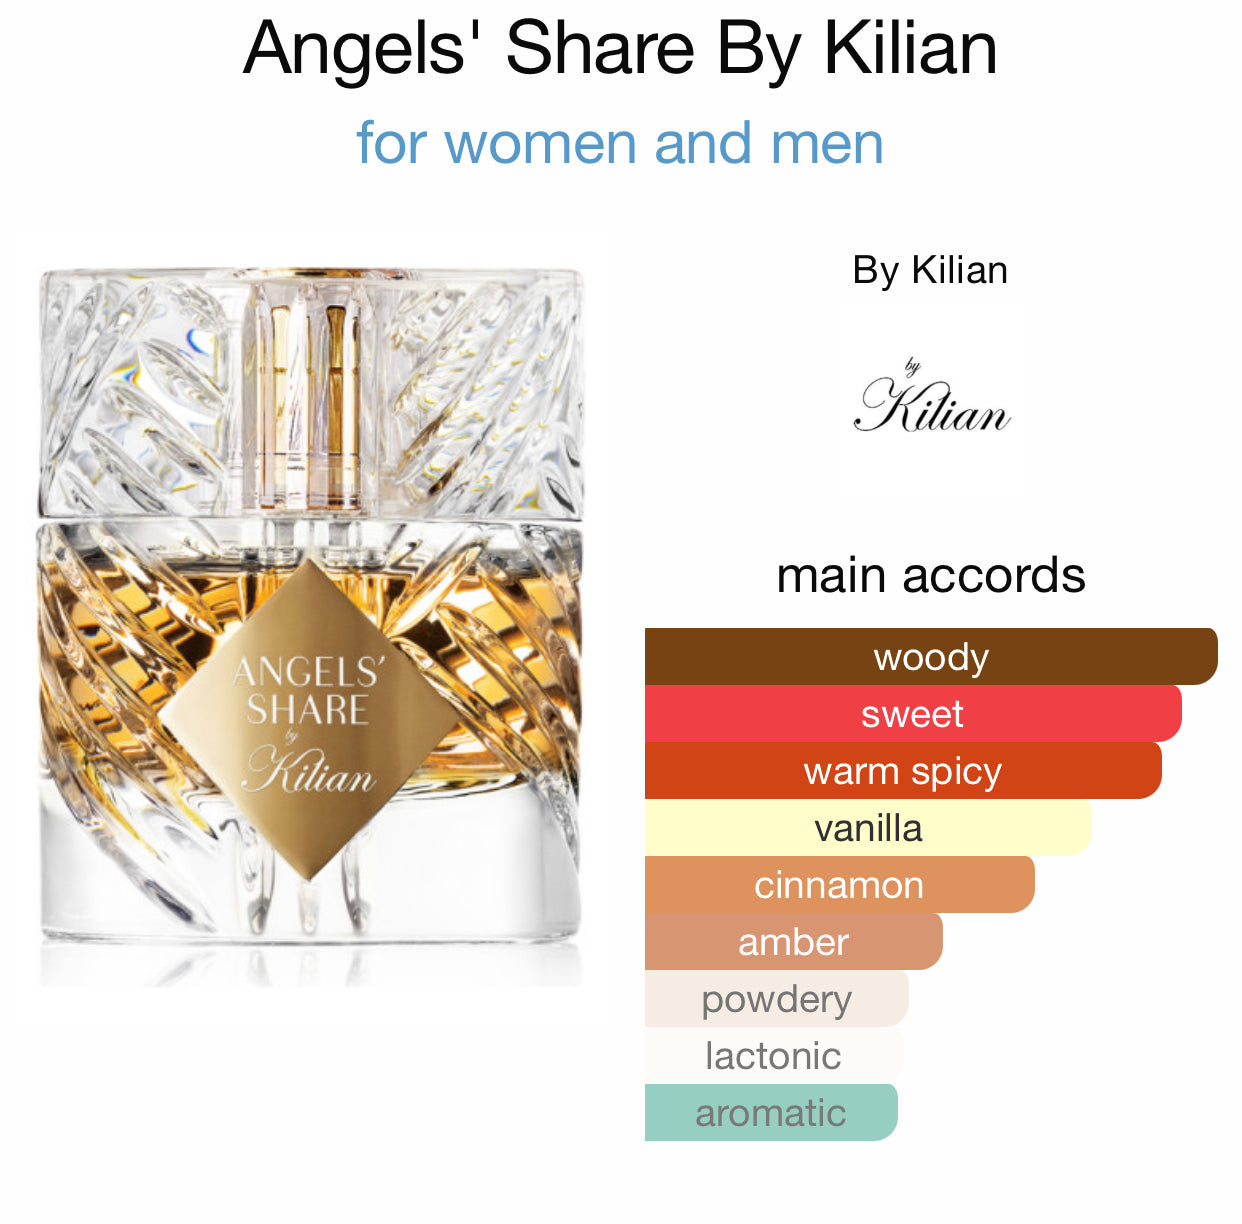 Inspired by Angels’ Share Eau de Parfum